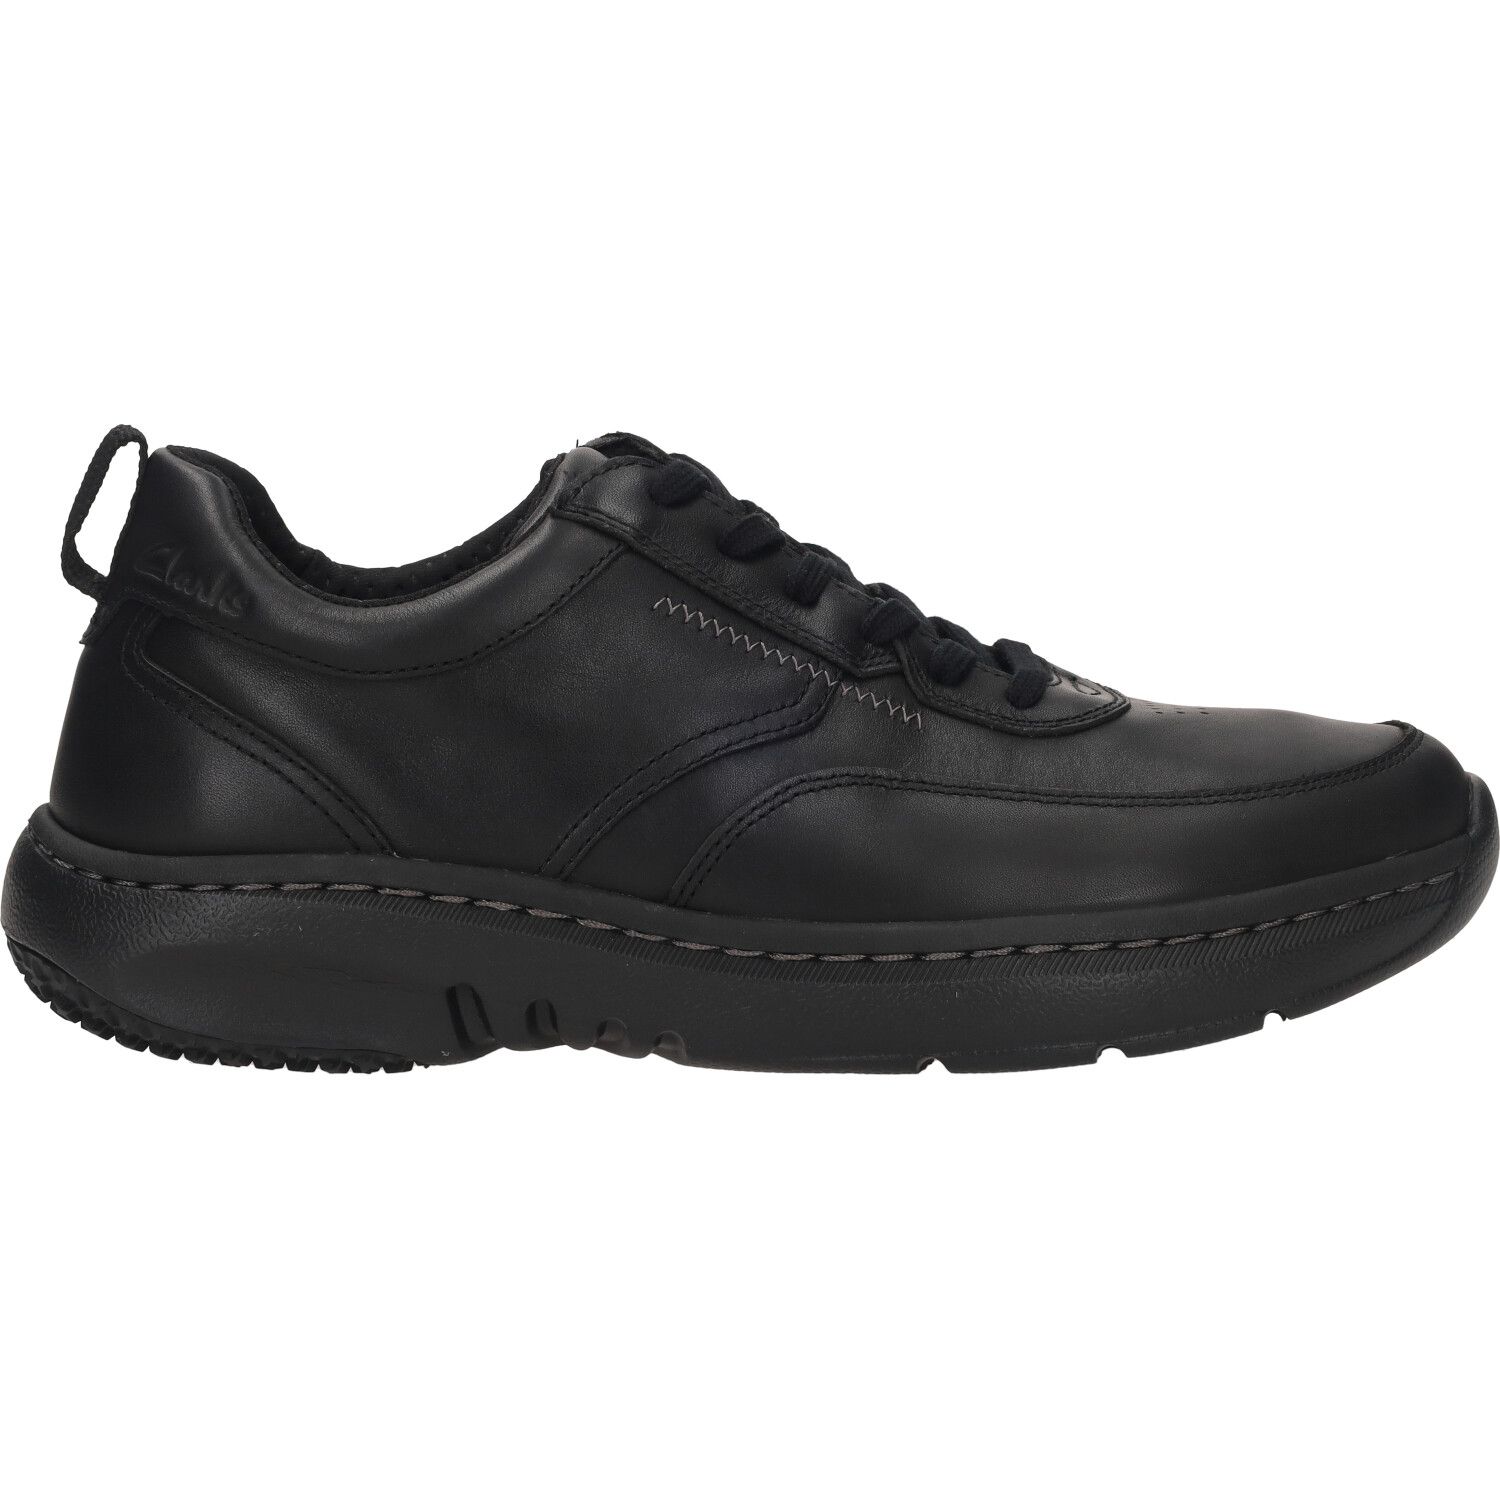 Clarks Sneaker ClarksPro Lace Black Leather